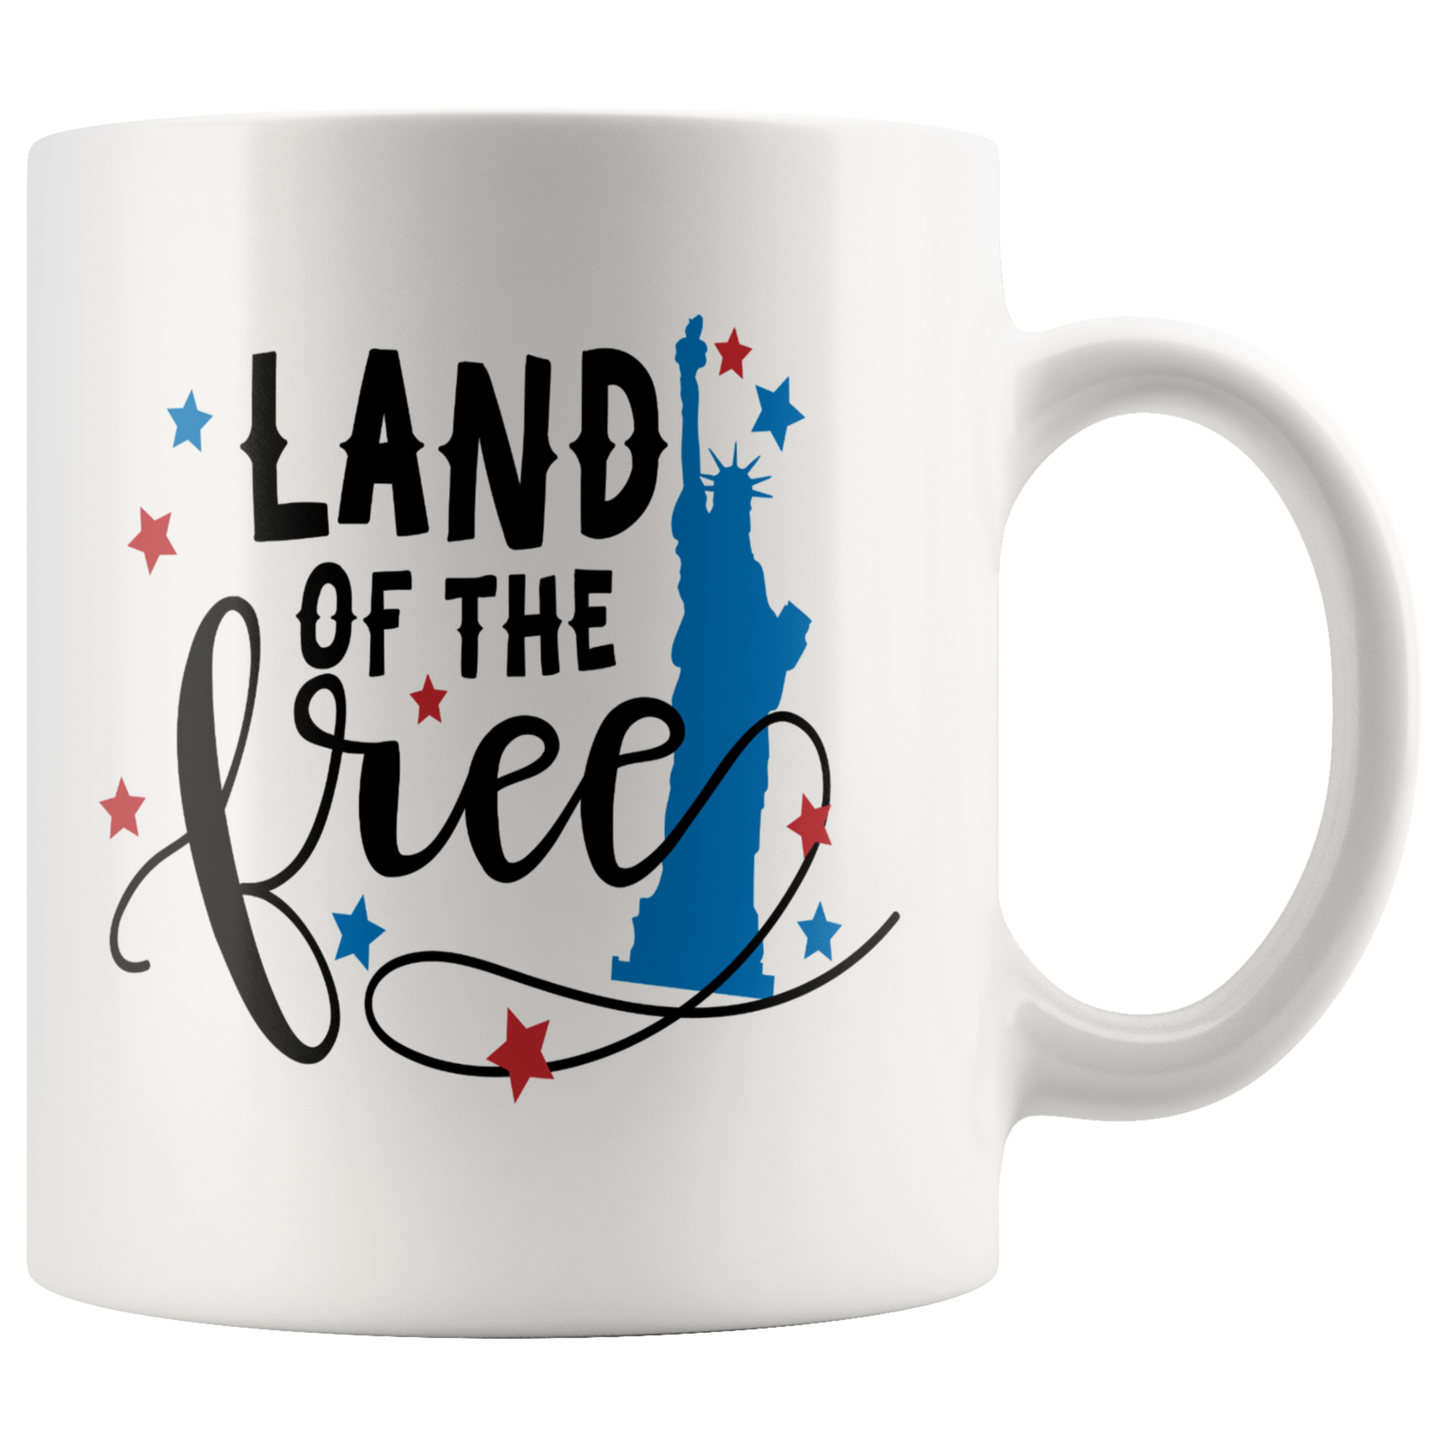 Patriotic coffee mug